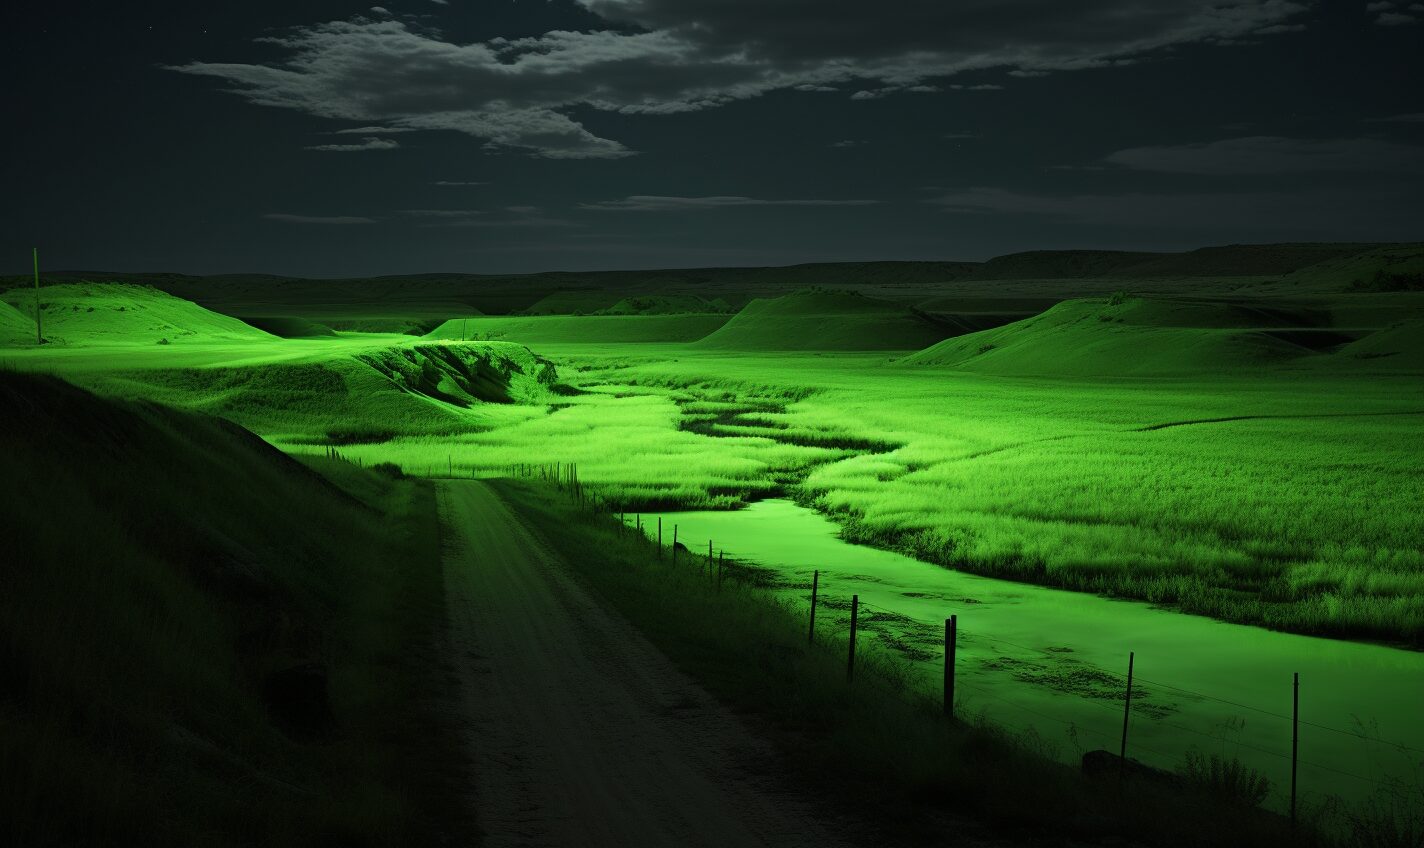 pierre, south dakota in a black and neon green glow